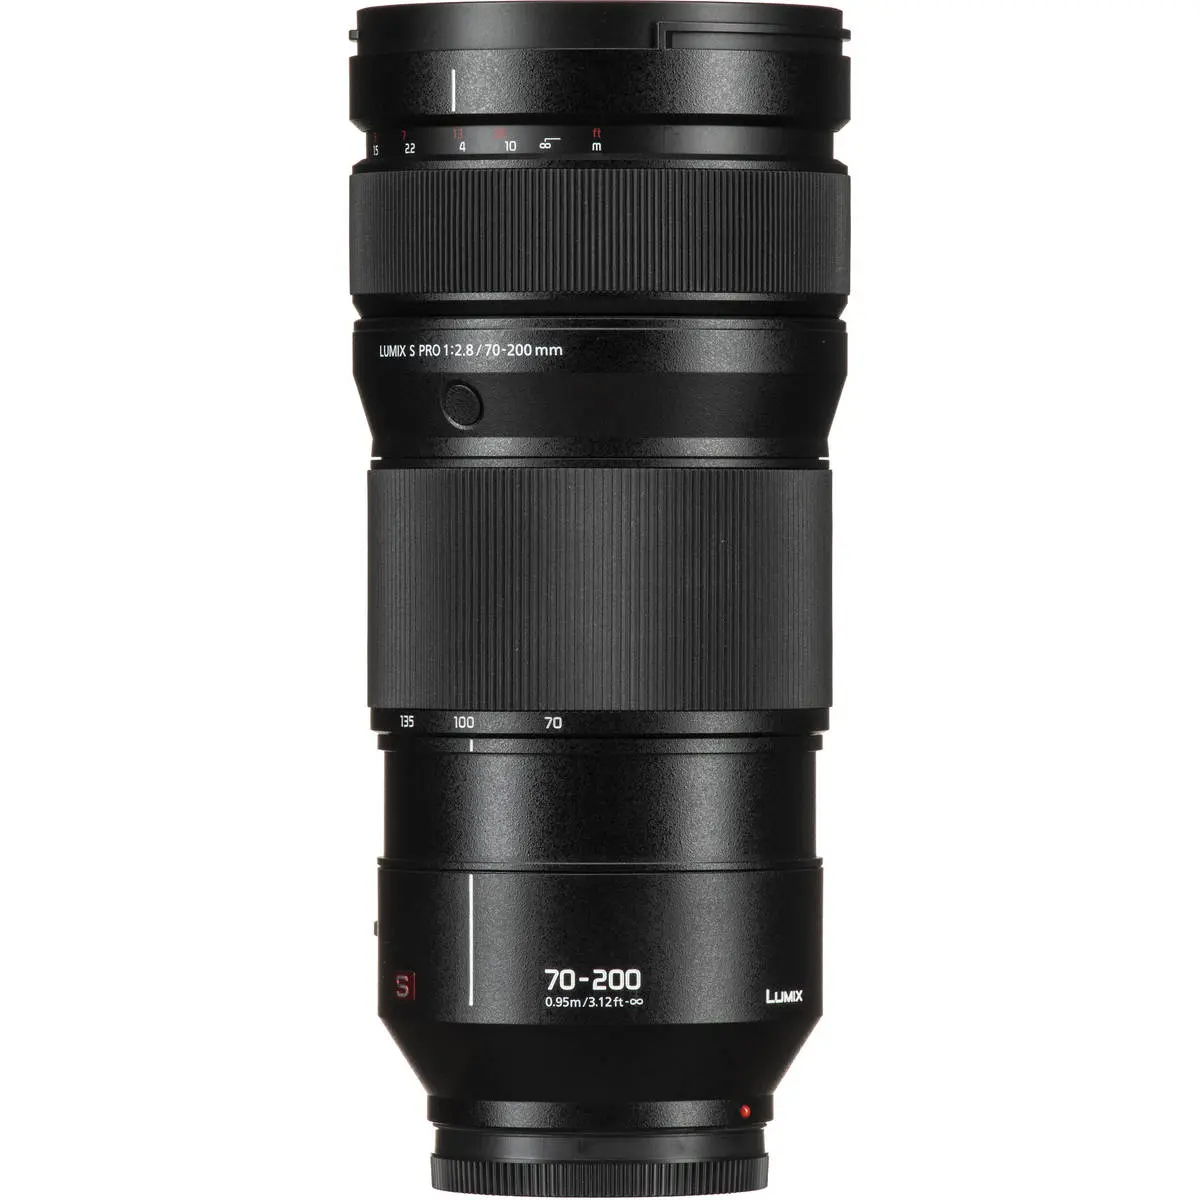 5. Panasonic Lumix S Pro 70-200mm F2.8 O.I.S. Lens